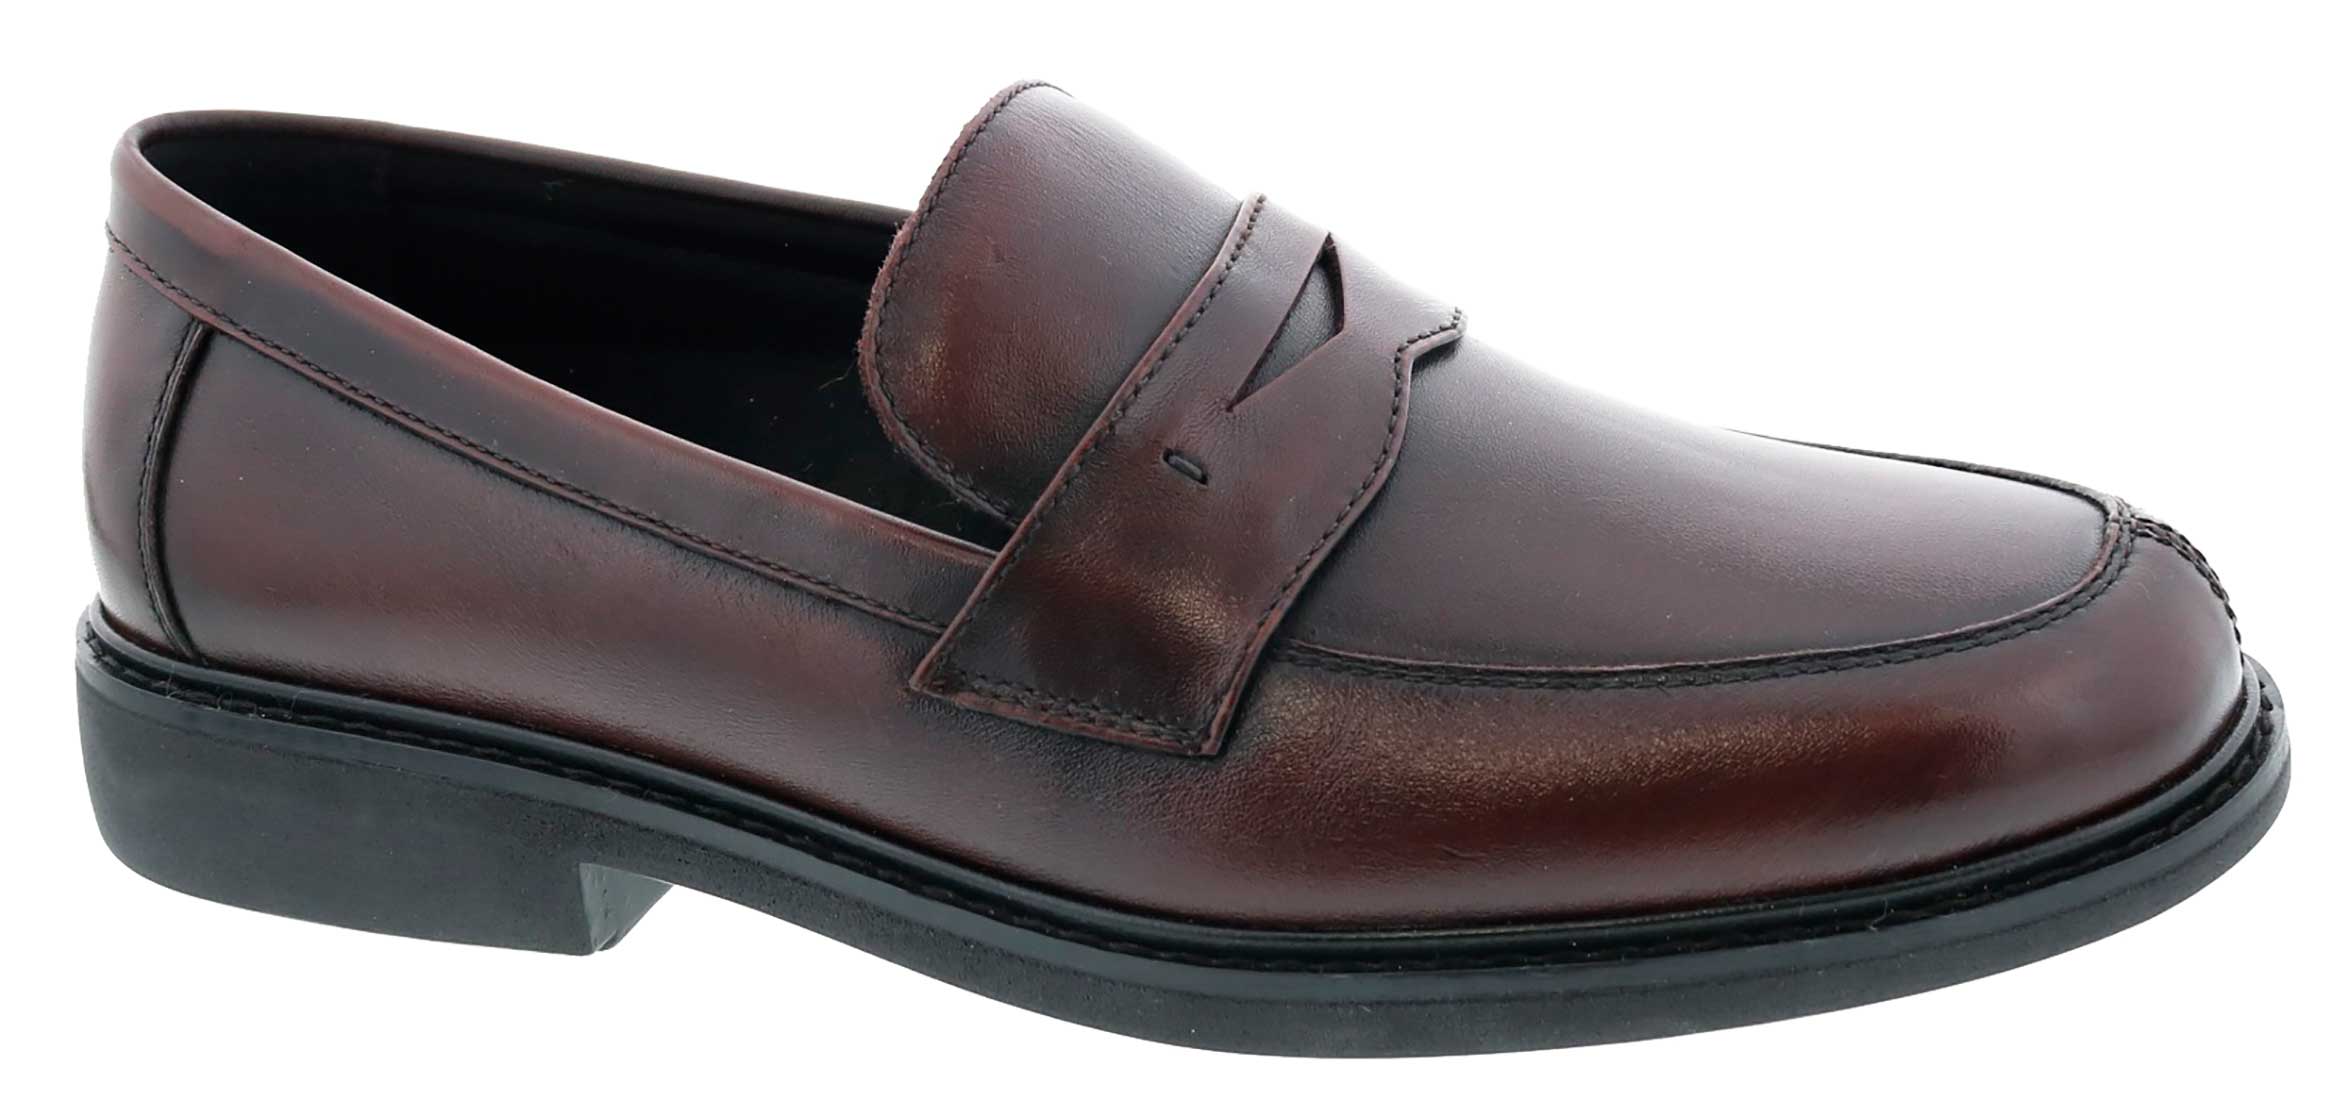 S1 Safety shoes e.s. Sirius II oxidblue/dolphingrey | Strauss